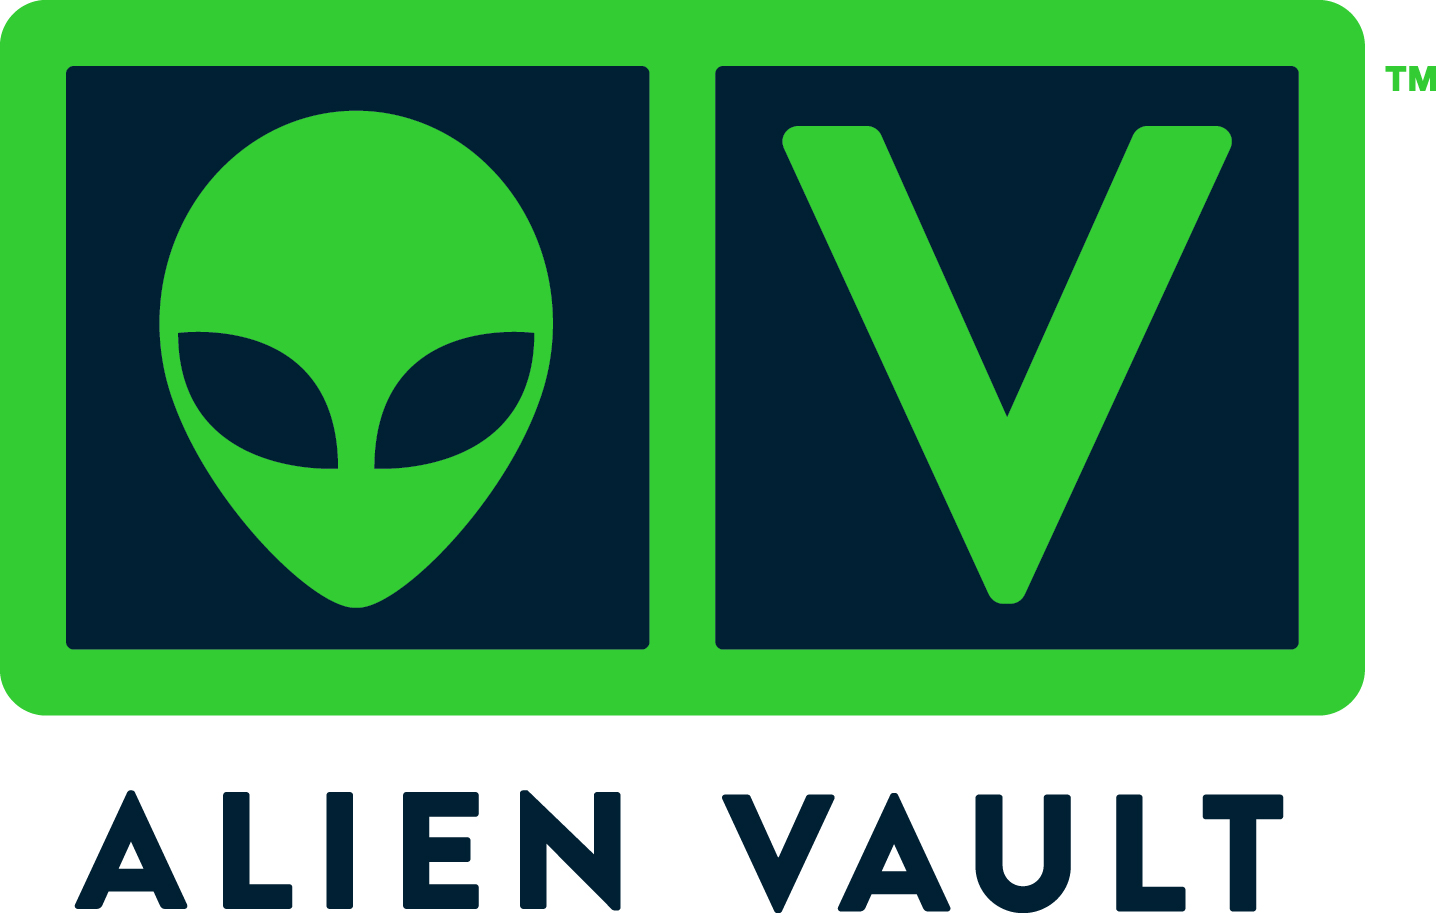 Alien+Vault+logo.jpg